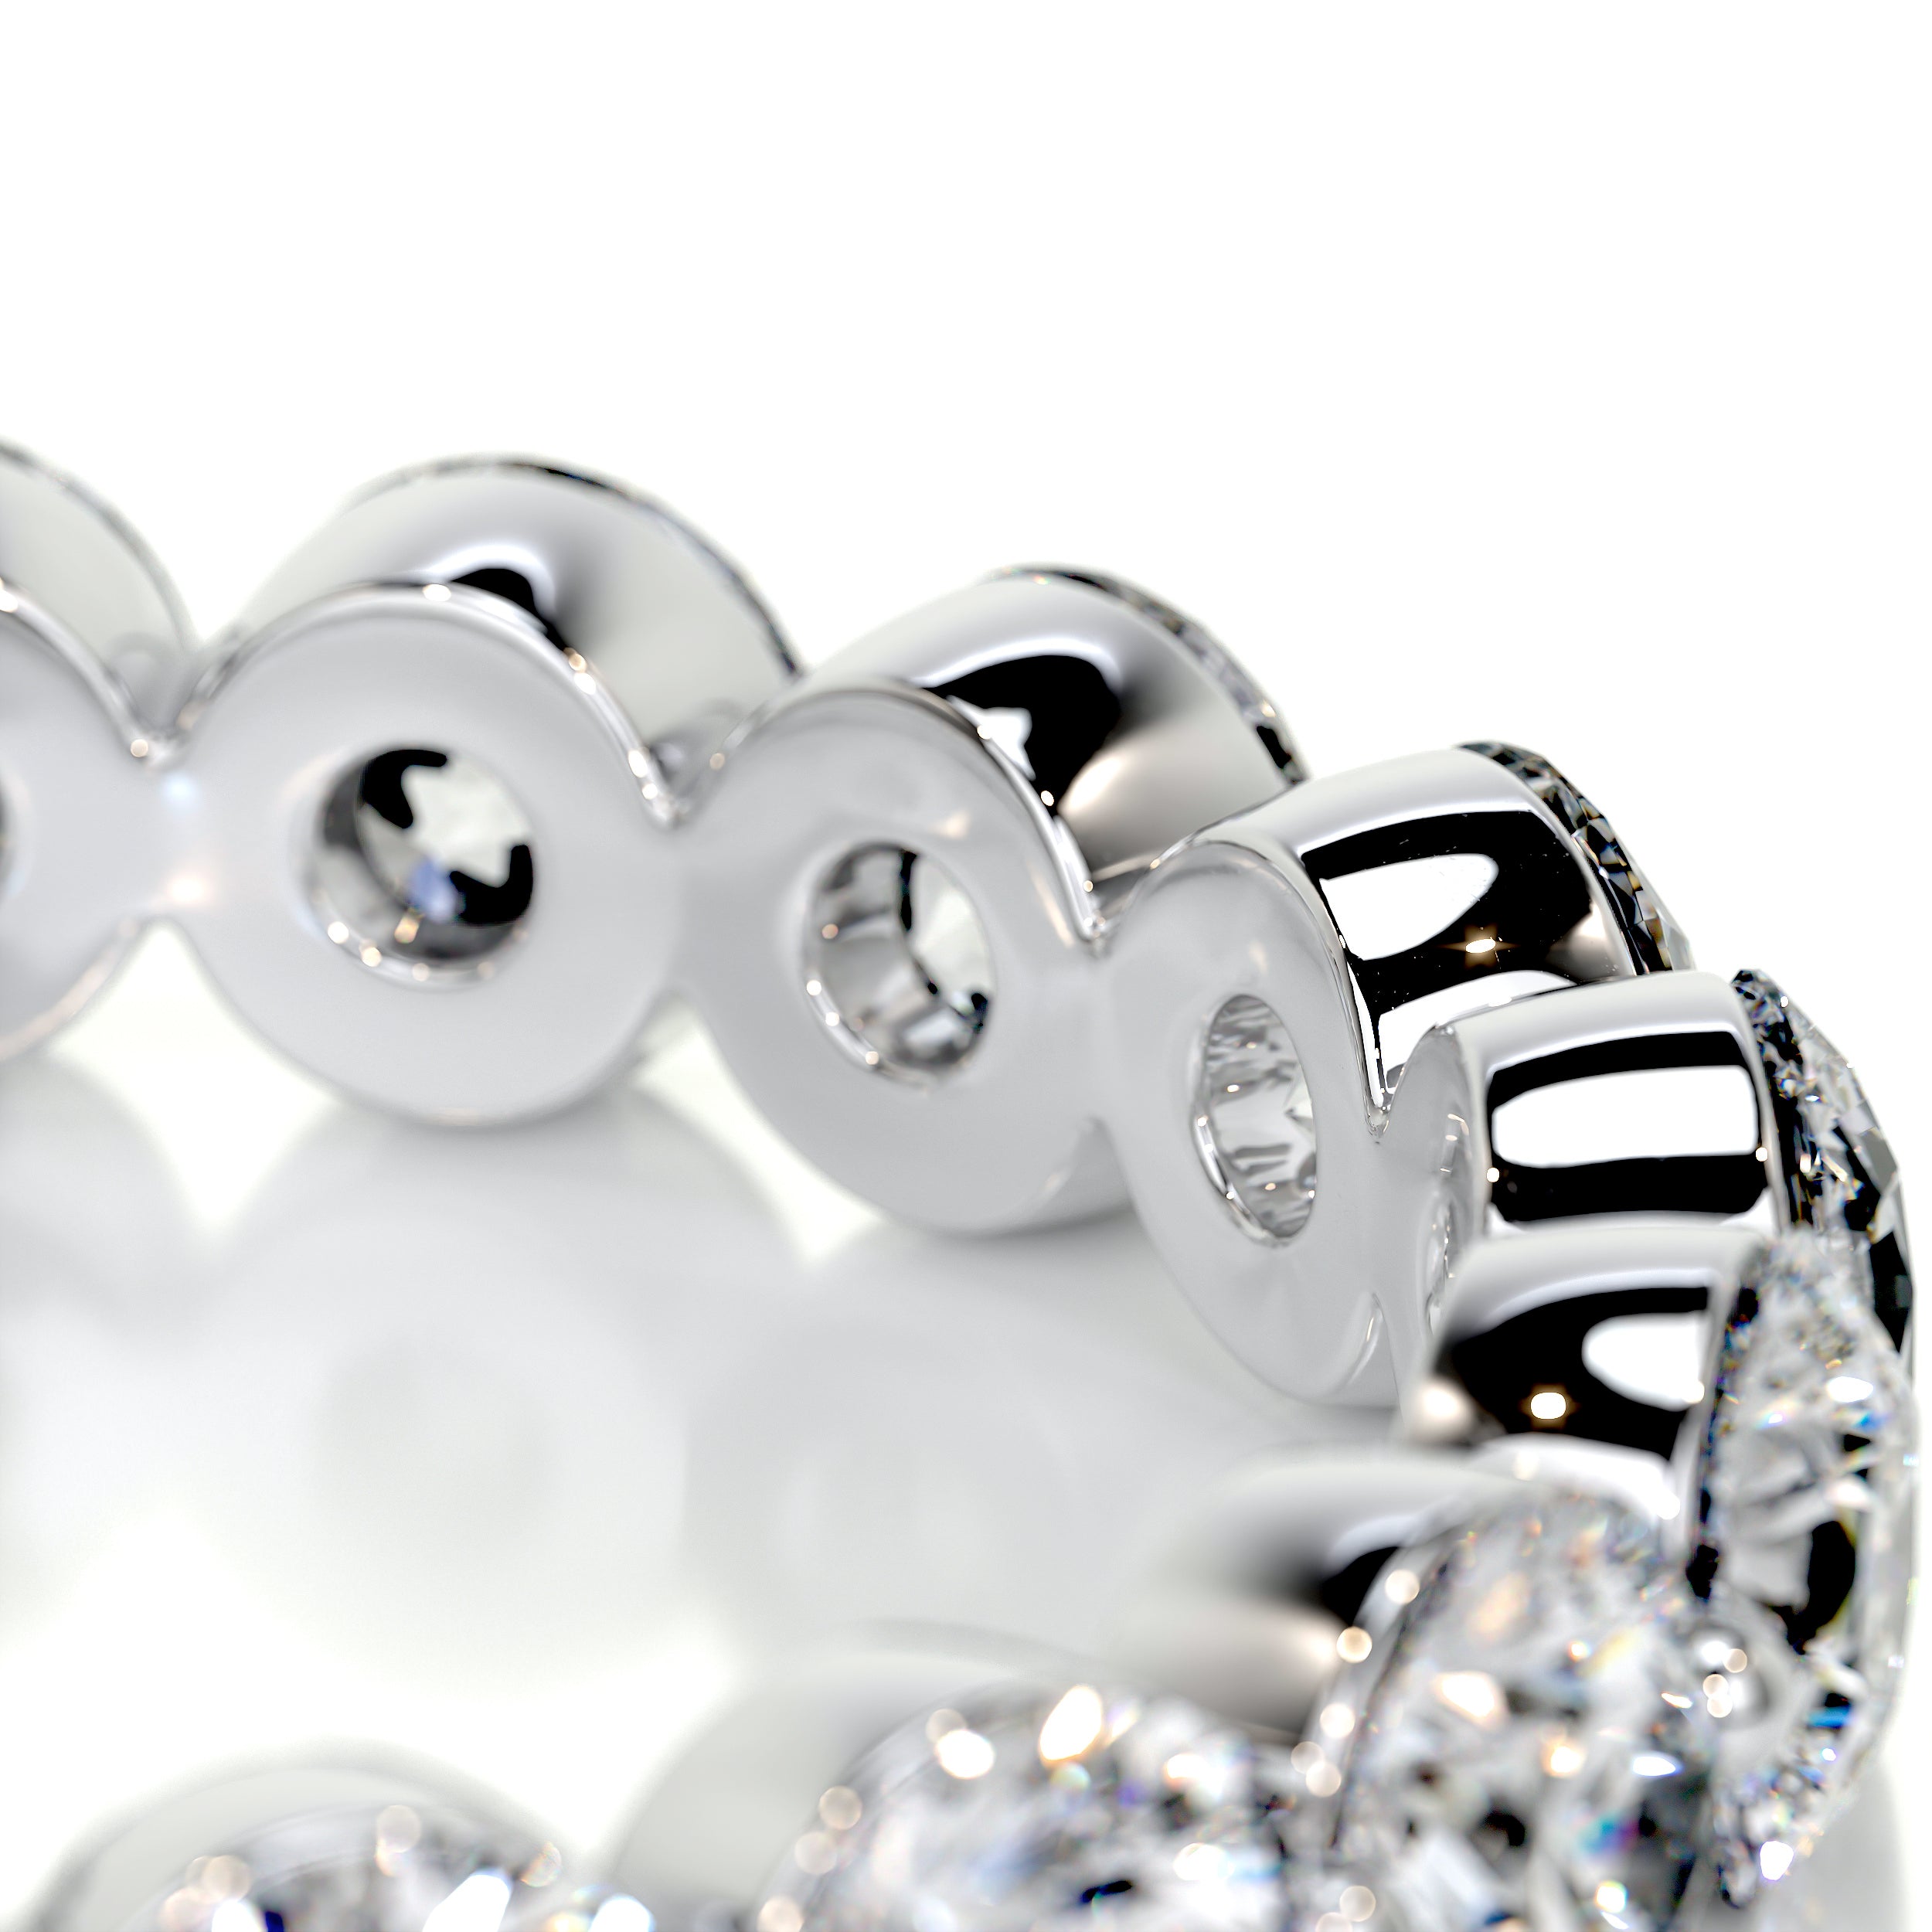 Josie Half-Eternity Wedding Ring   (2 Carat) -14K White Gold